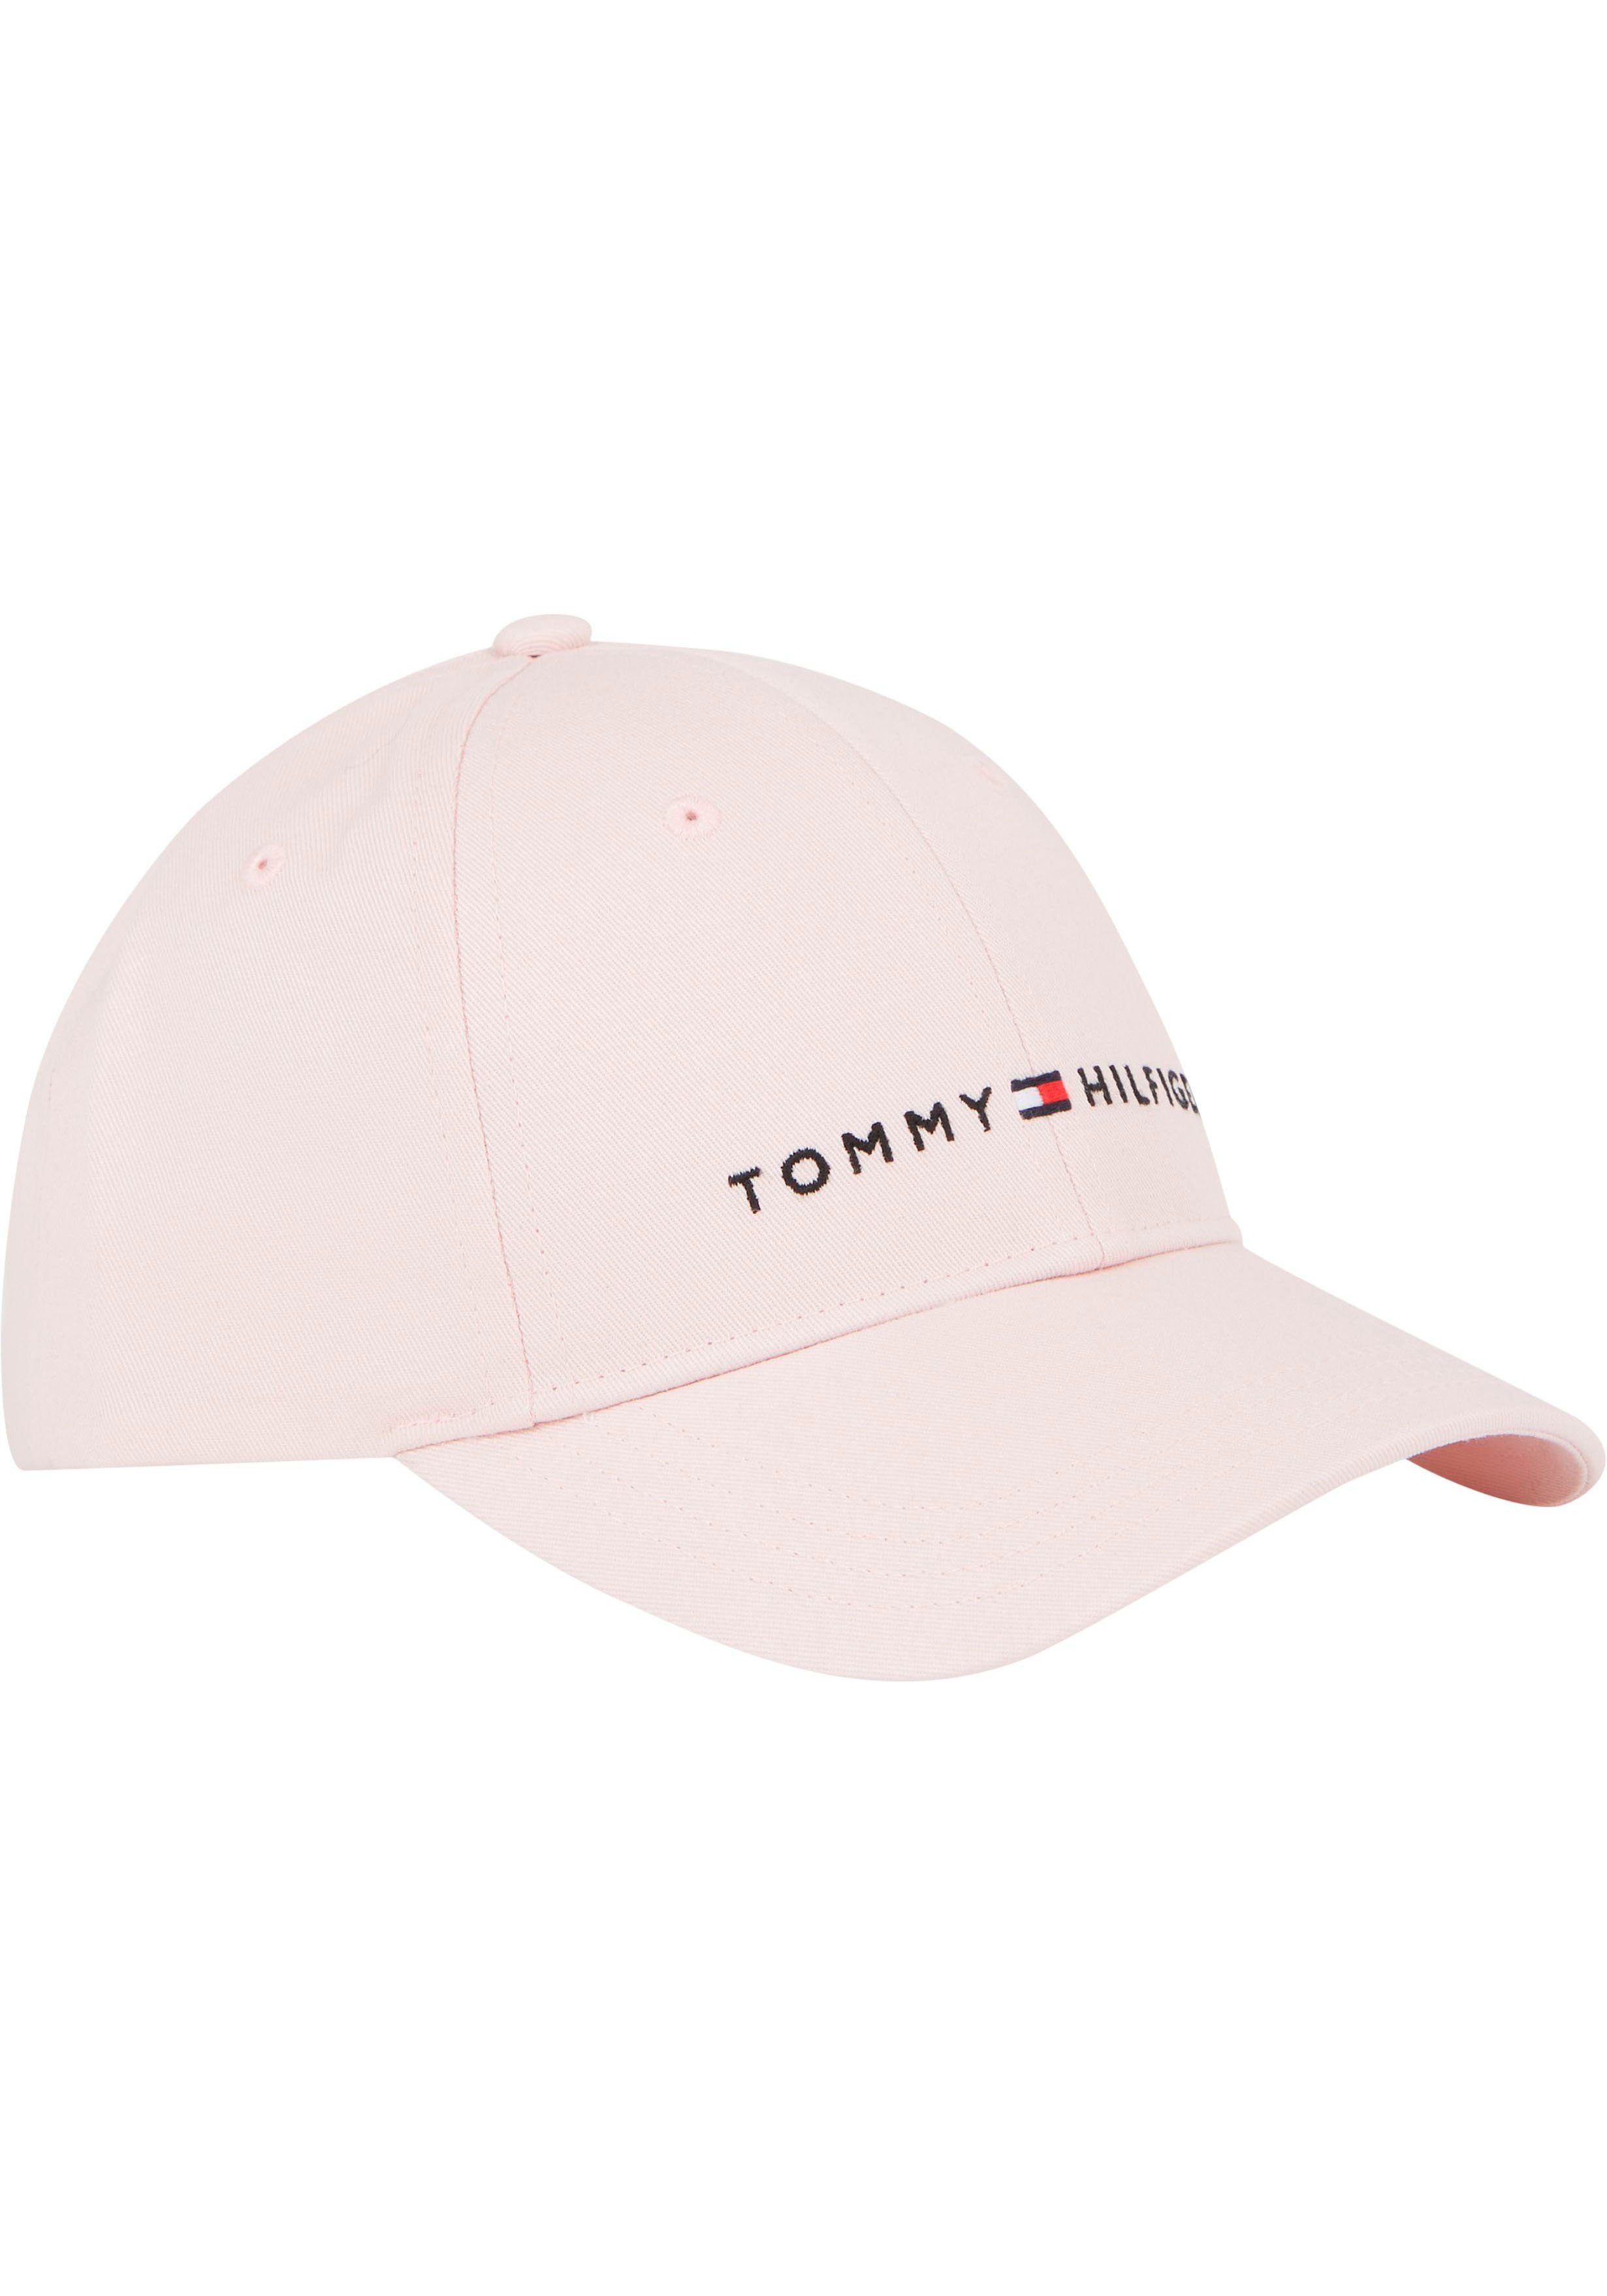 tommy hilfiger cap kinder online kaufen | OTTO | Baseball Caps